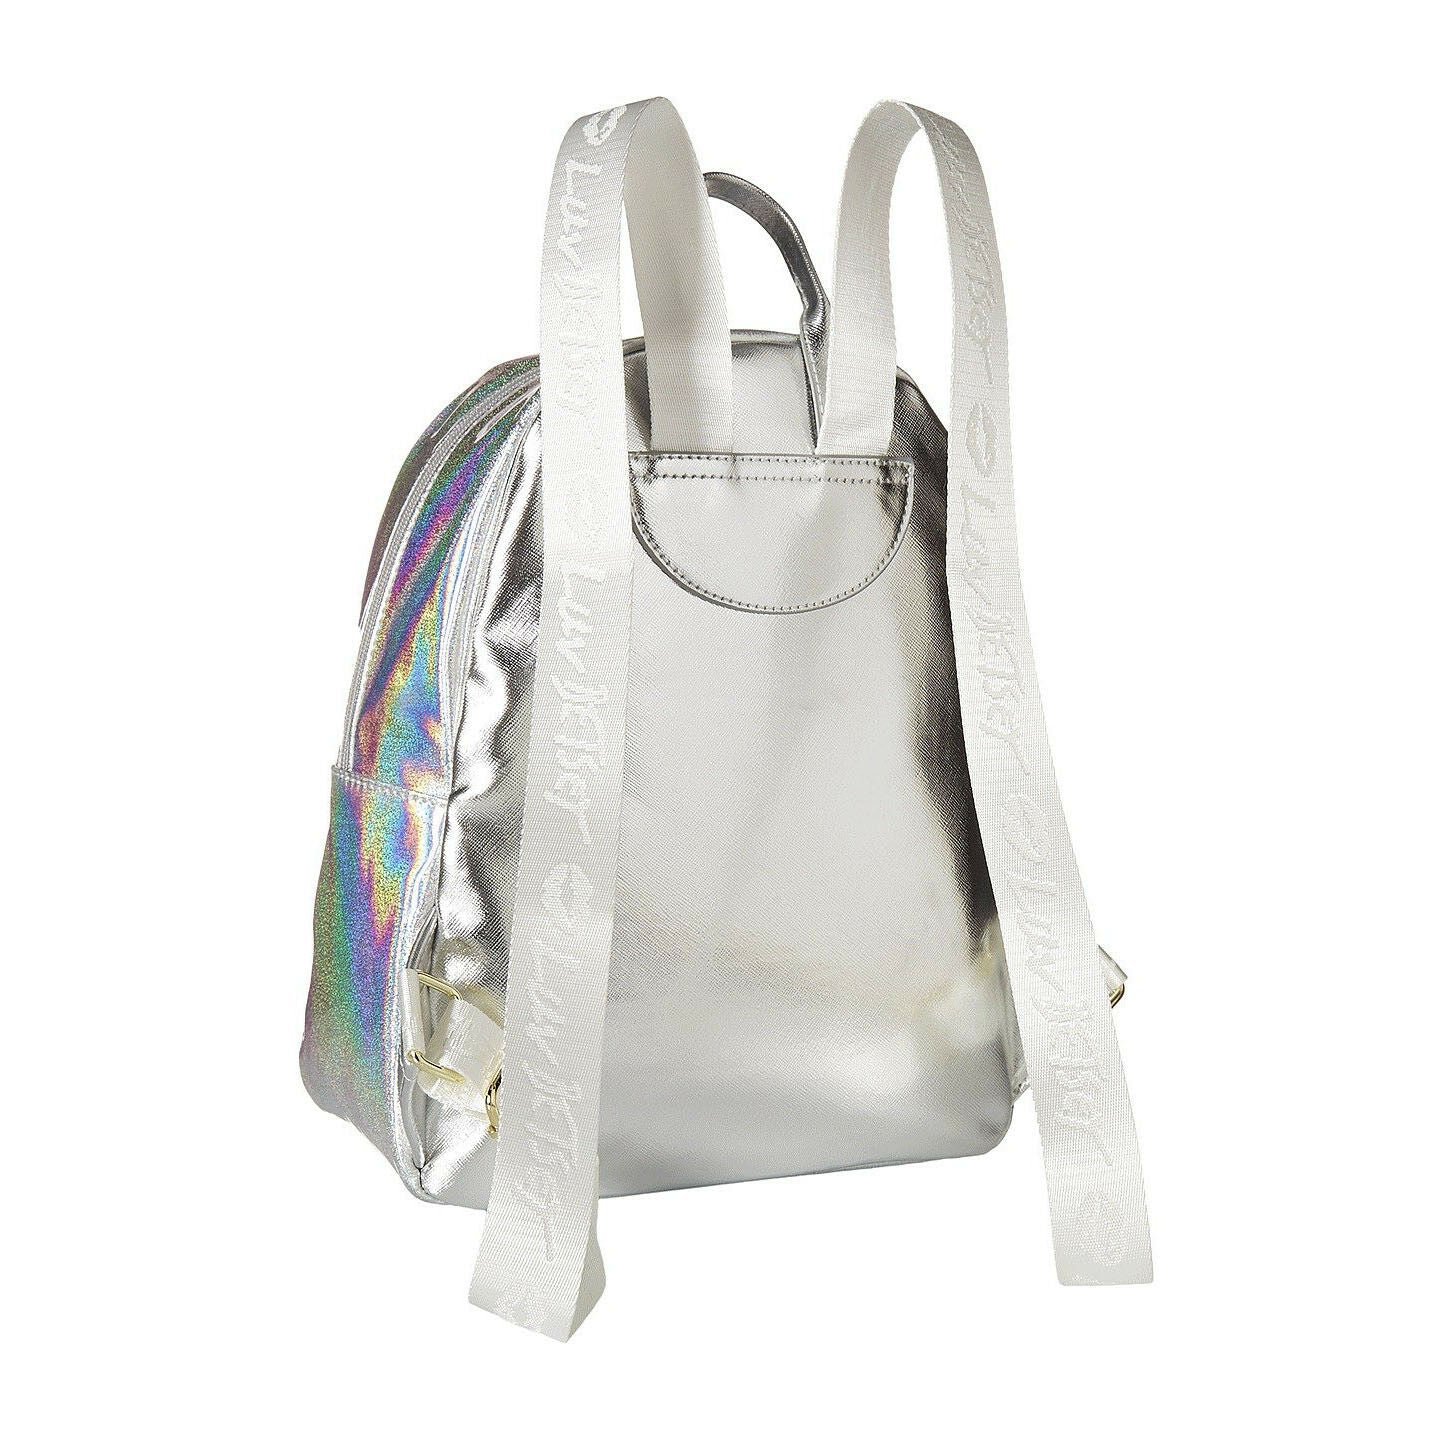 Betsey Johnson Mariss Rainbow Heart Iridescent Silver Metallic Backpack NWT